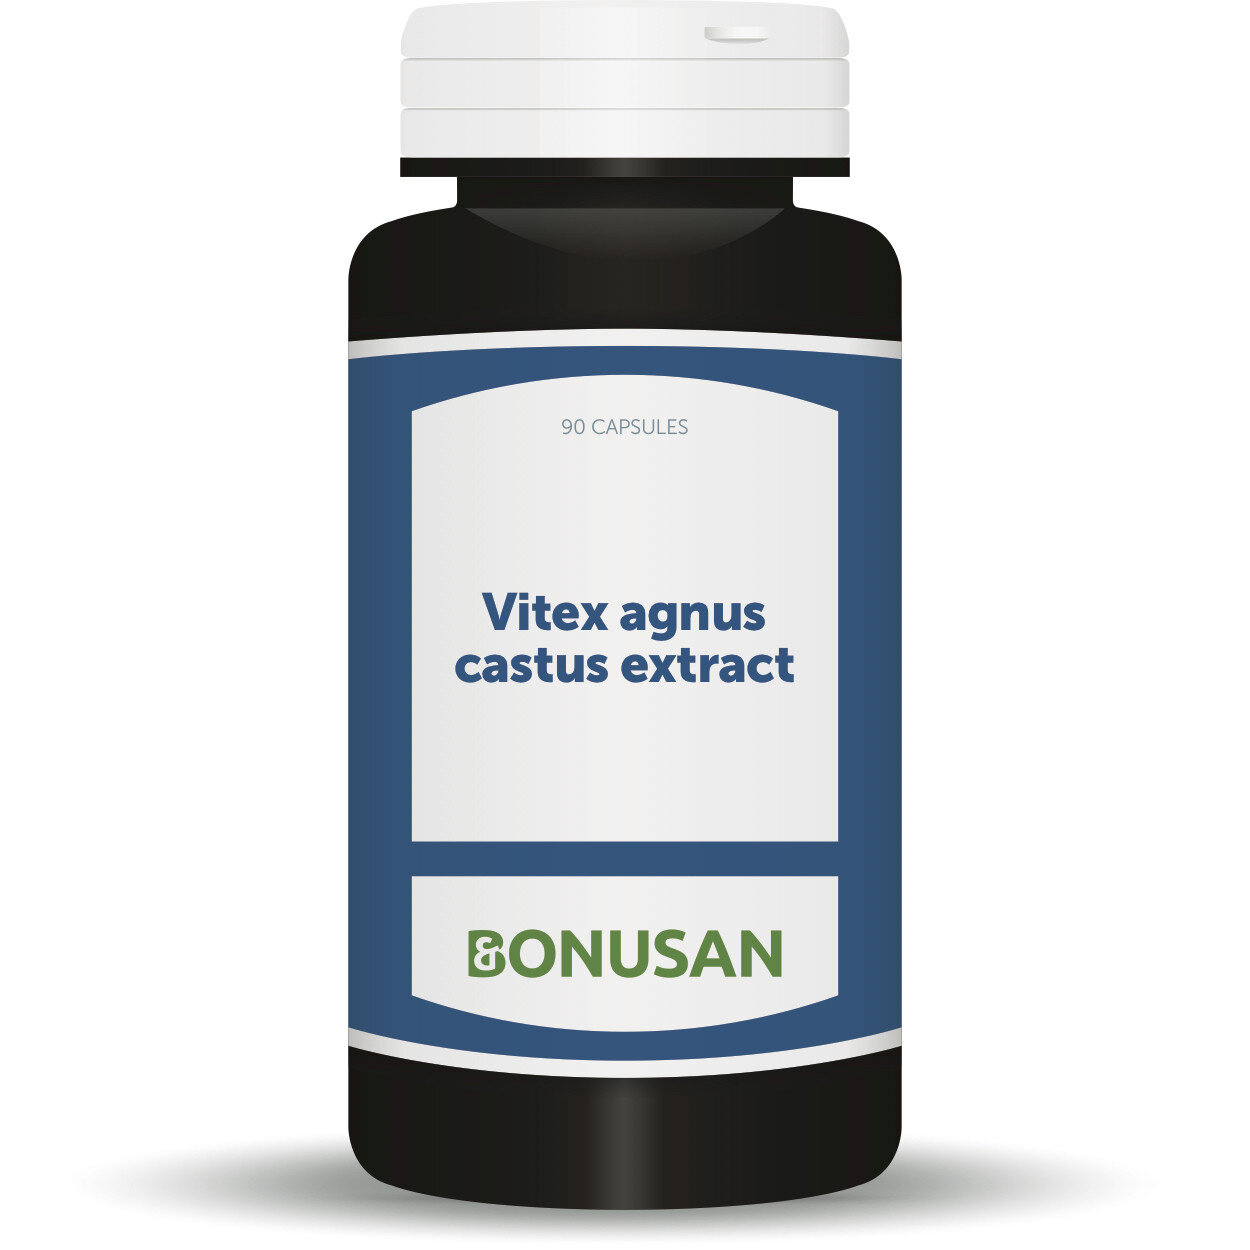 Bonusan Vitex agnus castus extract